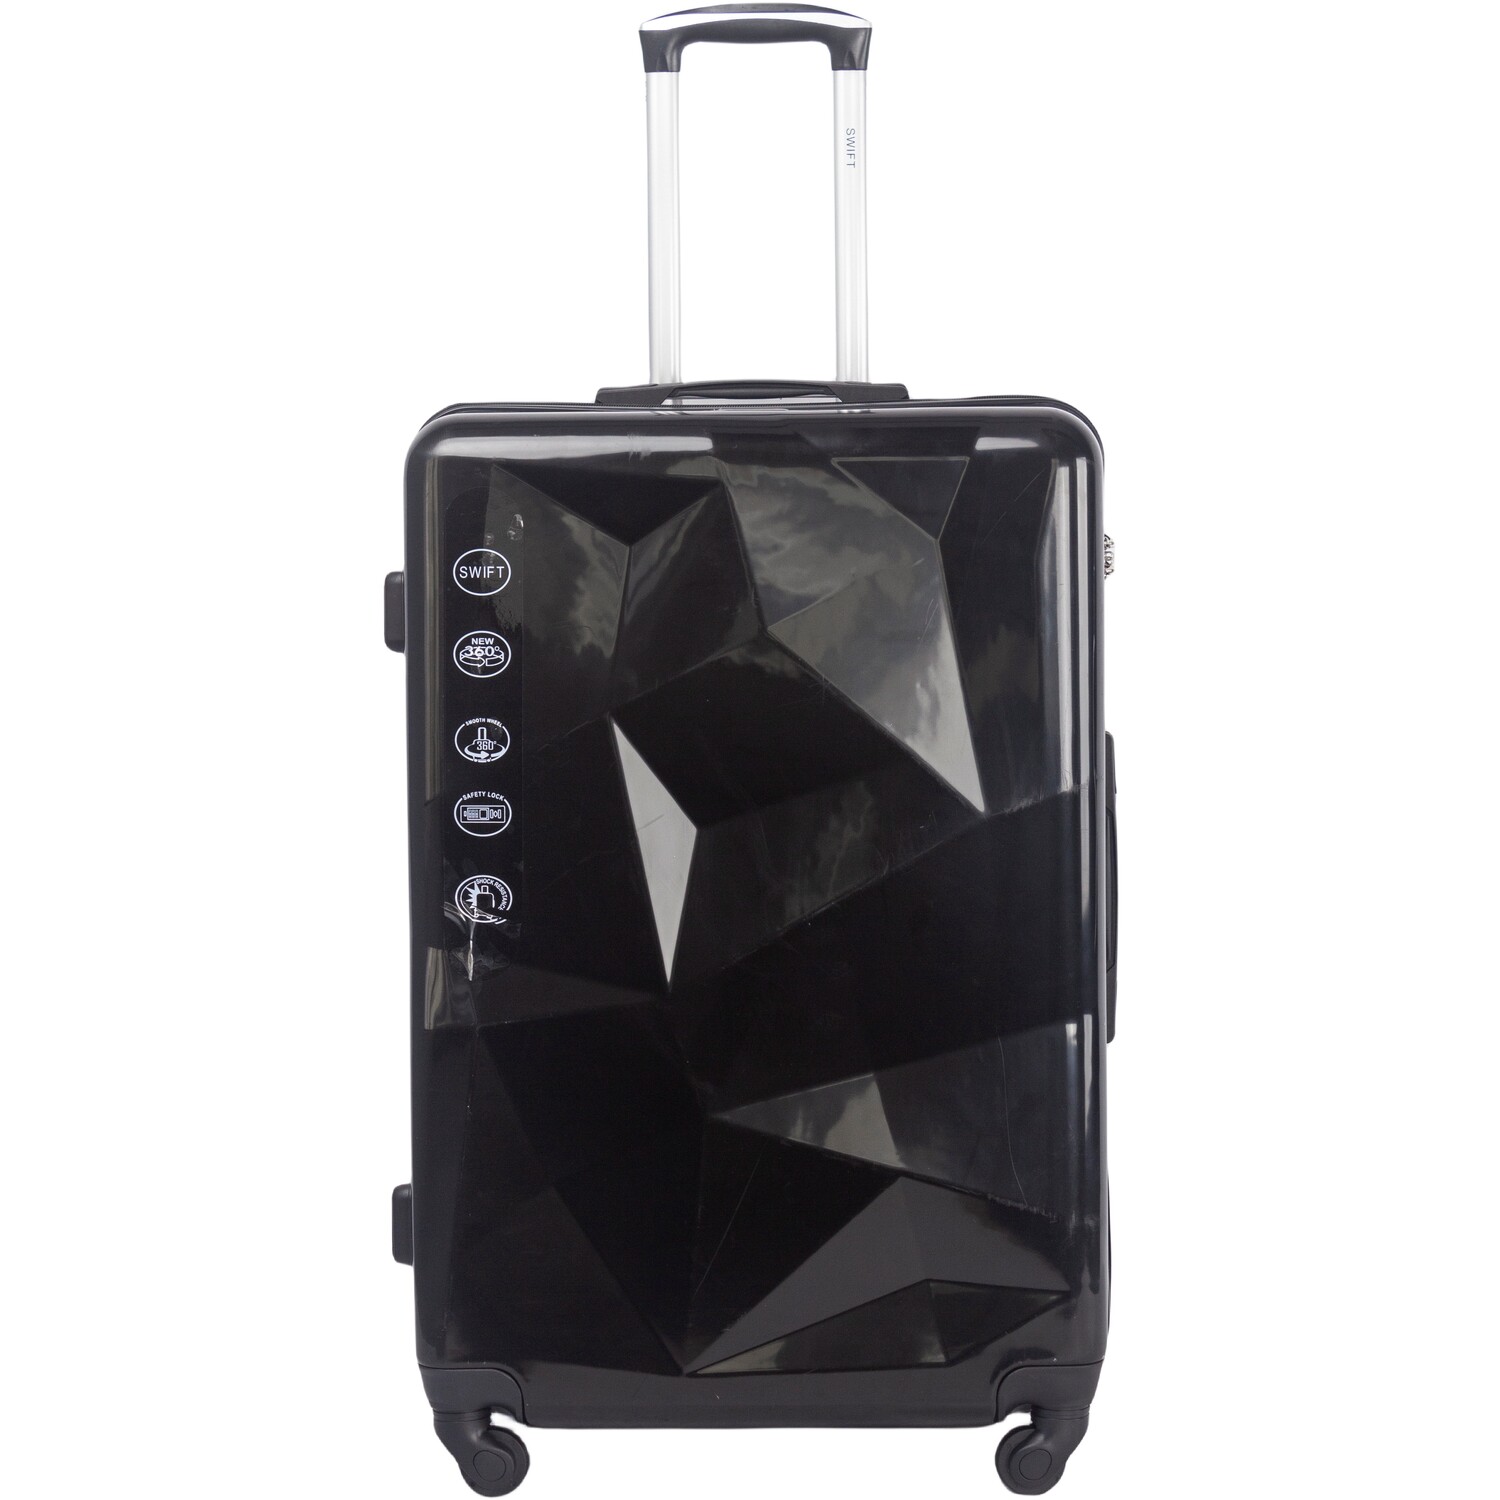 Swift Comet Suitcase - Black / Large Case Image 1